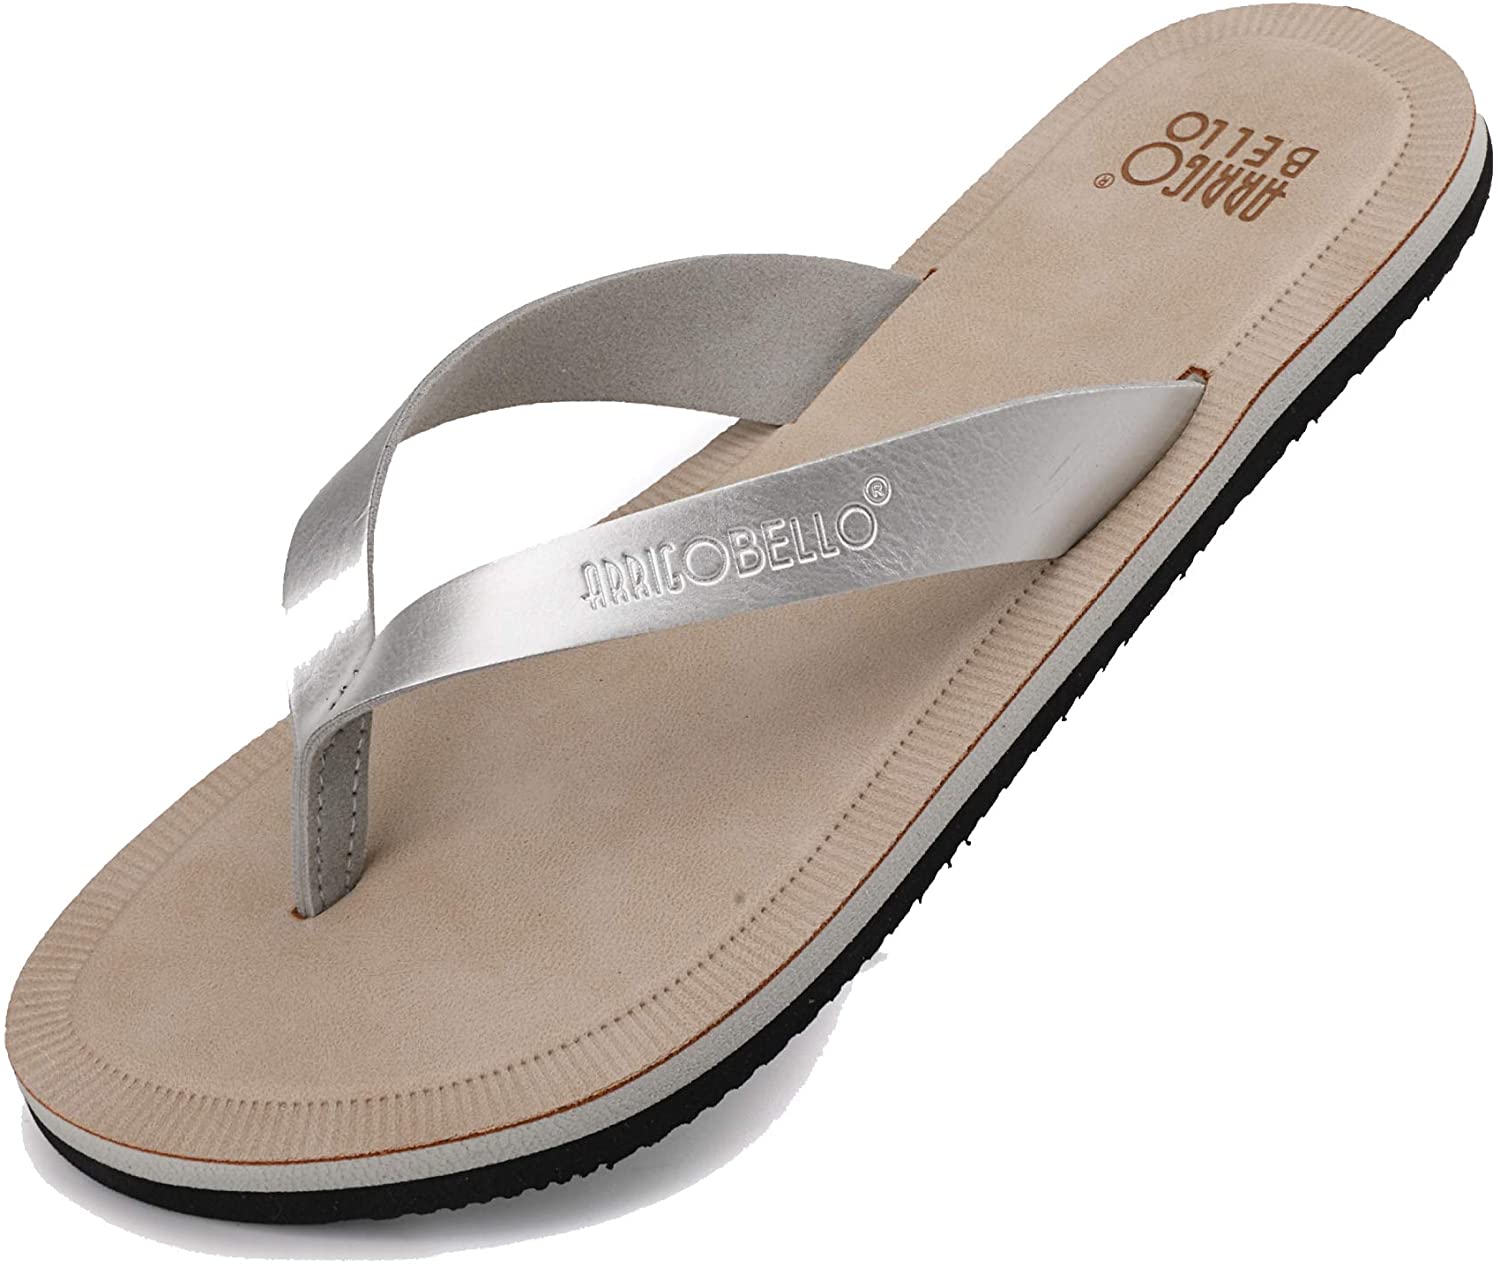 AX BOXING Women's Flip Flops Thong Sandals Leather Slide Beach Pool Slipper Sandals 